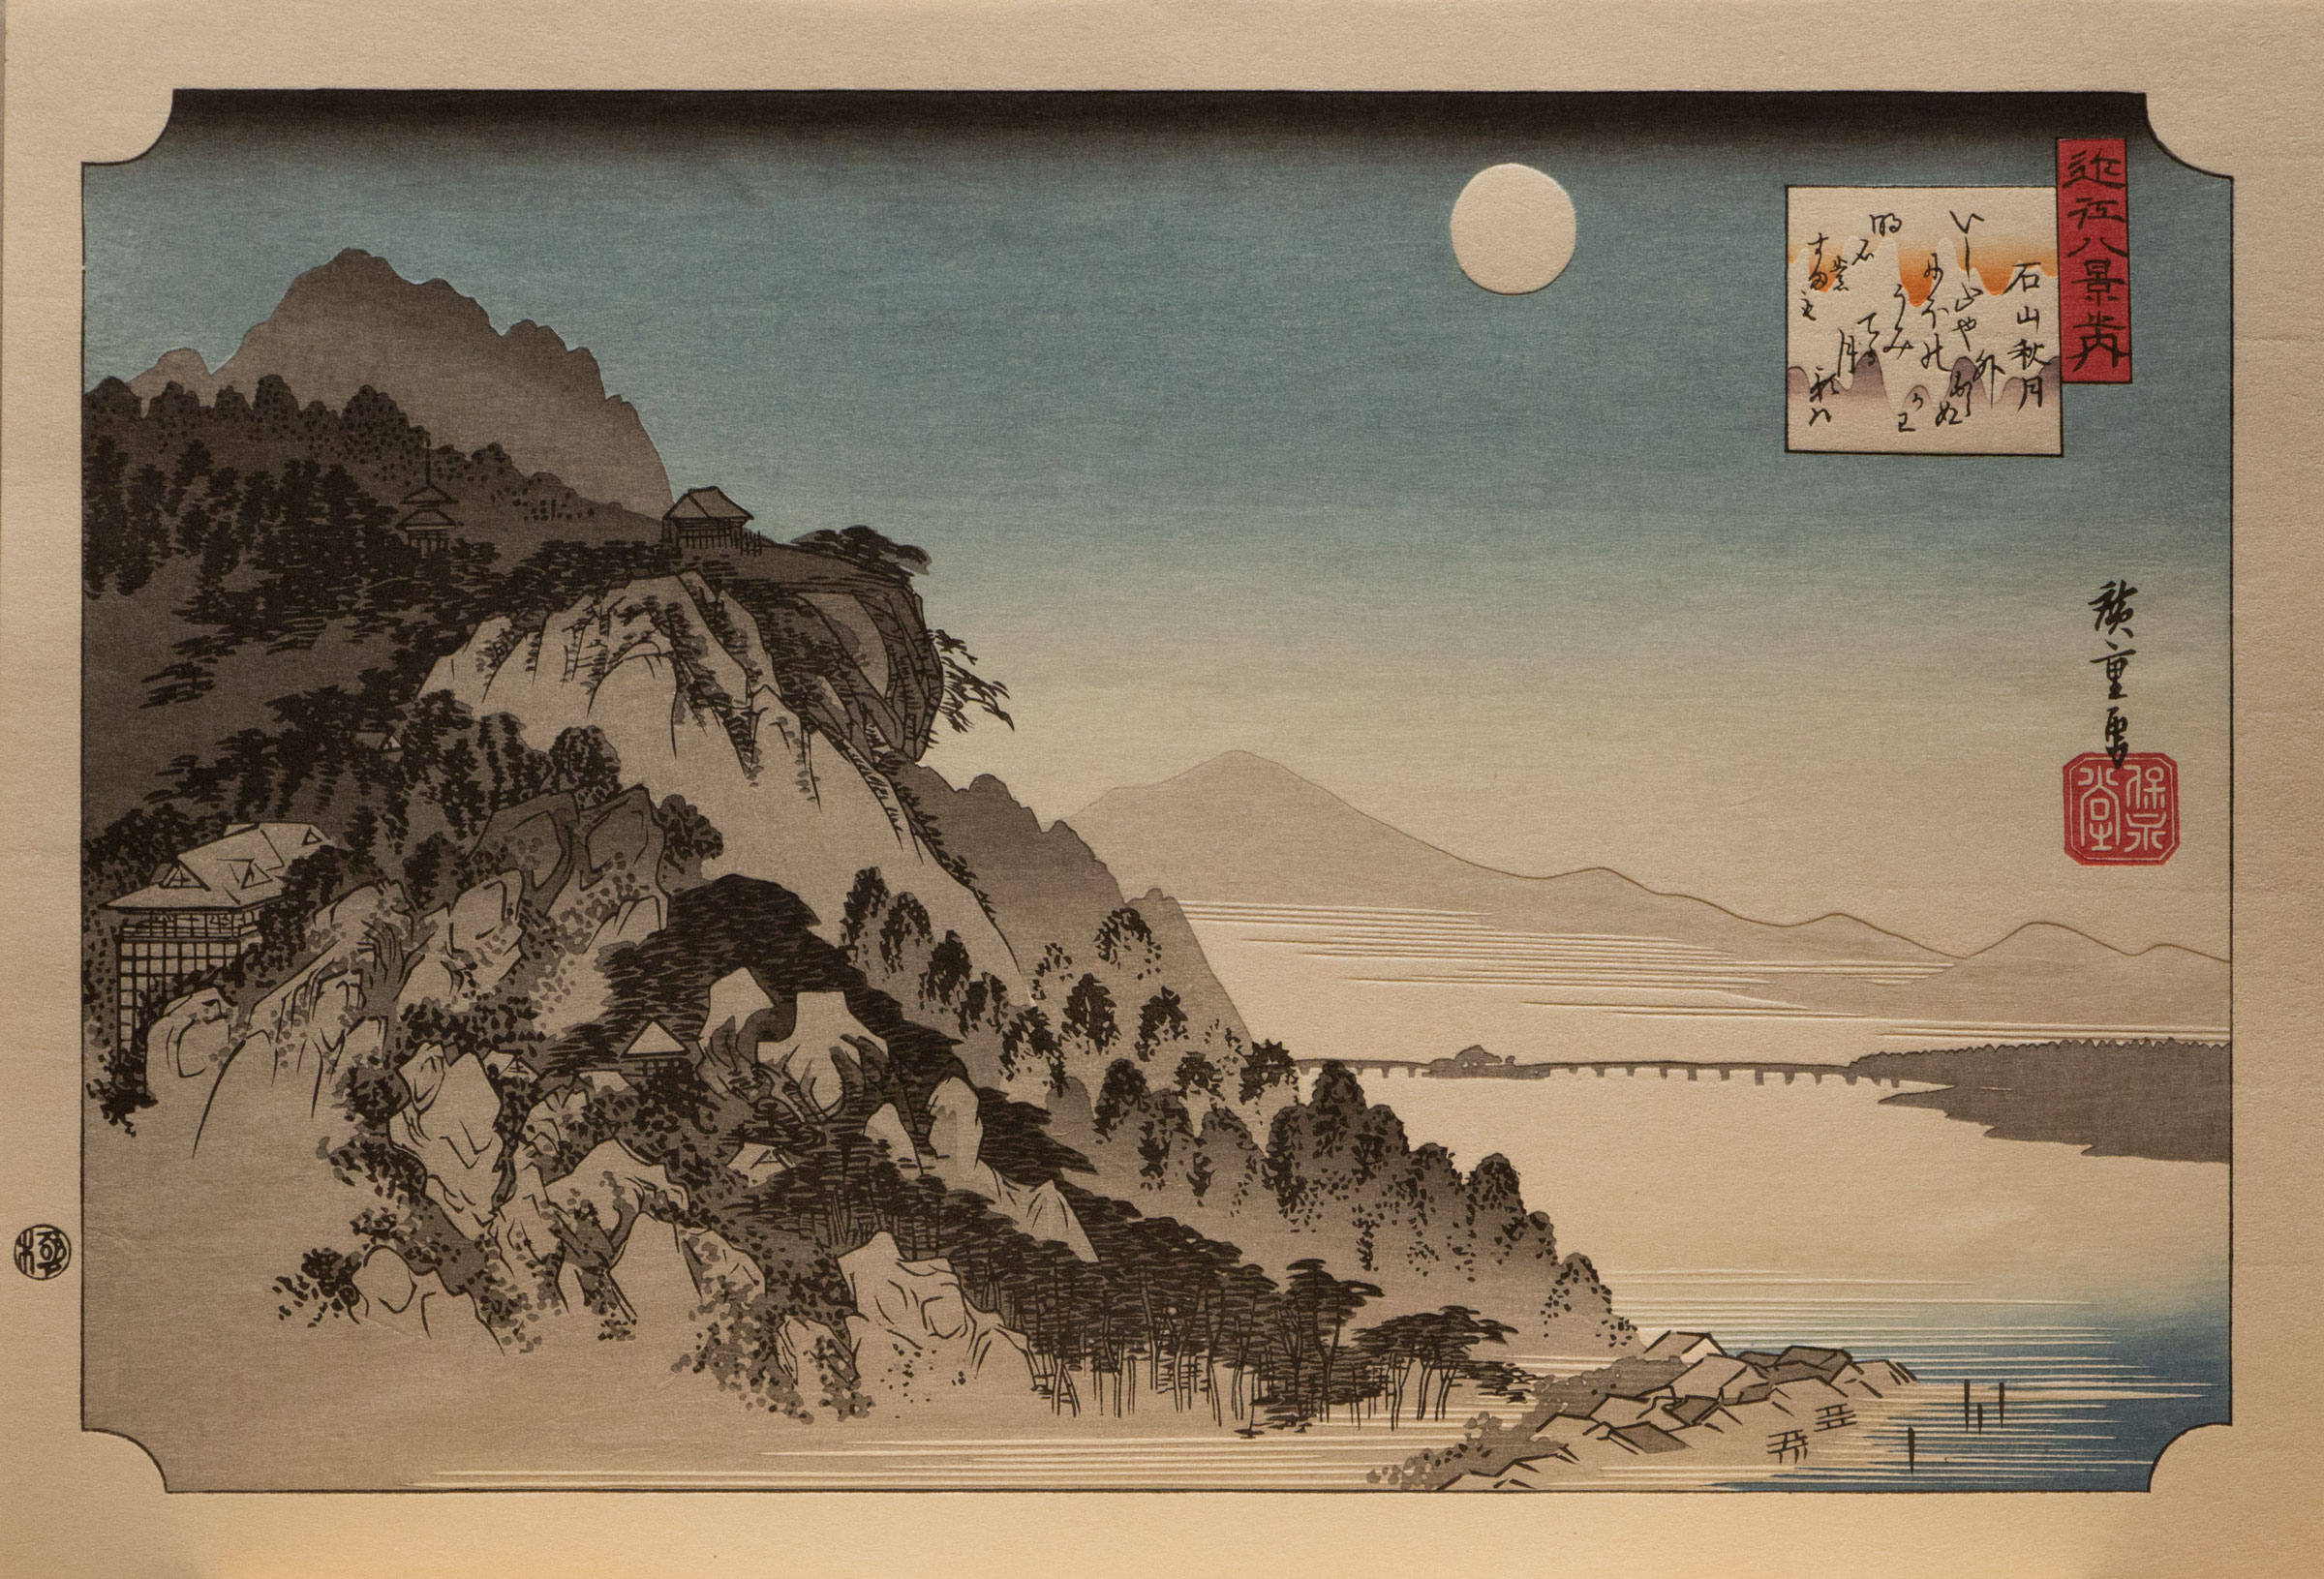 General 2400x1631 Utagawa Hiroshige woodblock print Japanese Art traditional art lake mountains Moon rocks trees digital art